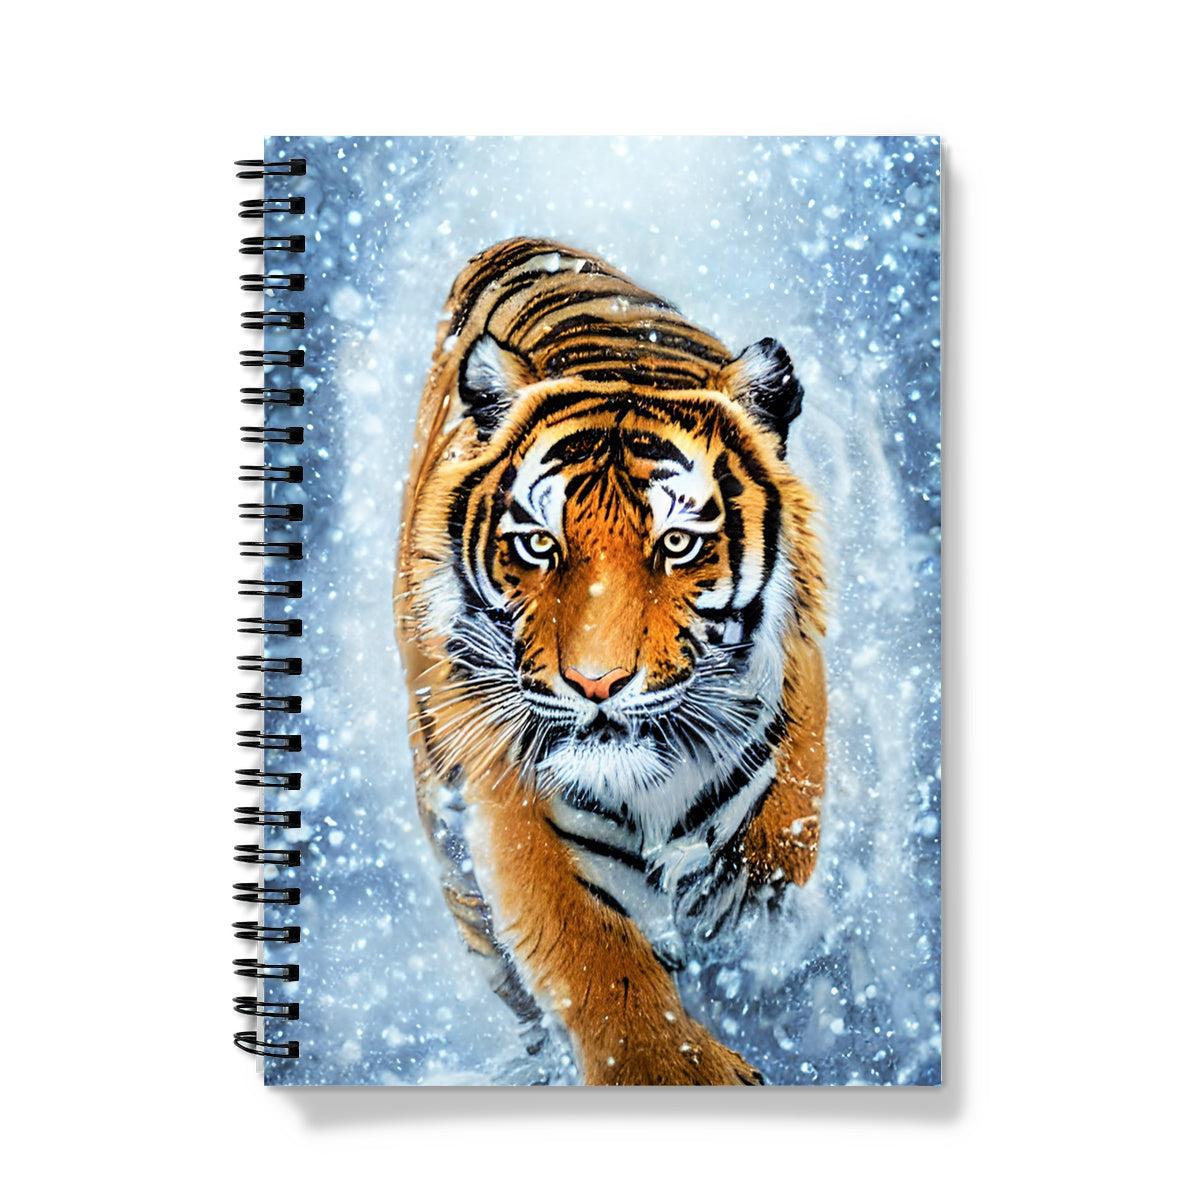 Tiger Snow Spiral Notebook